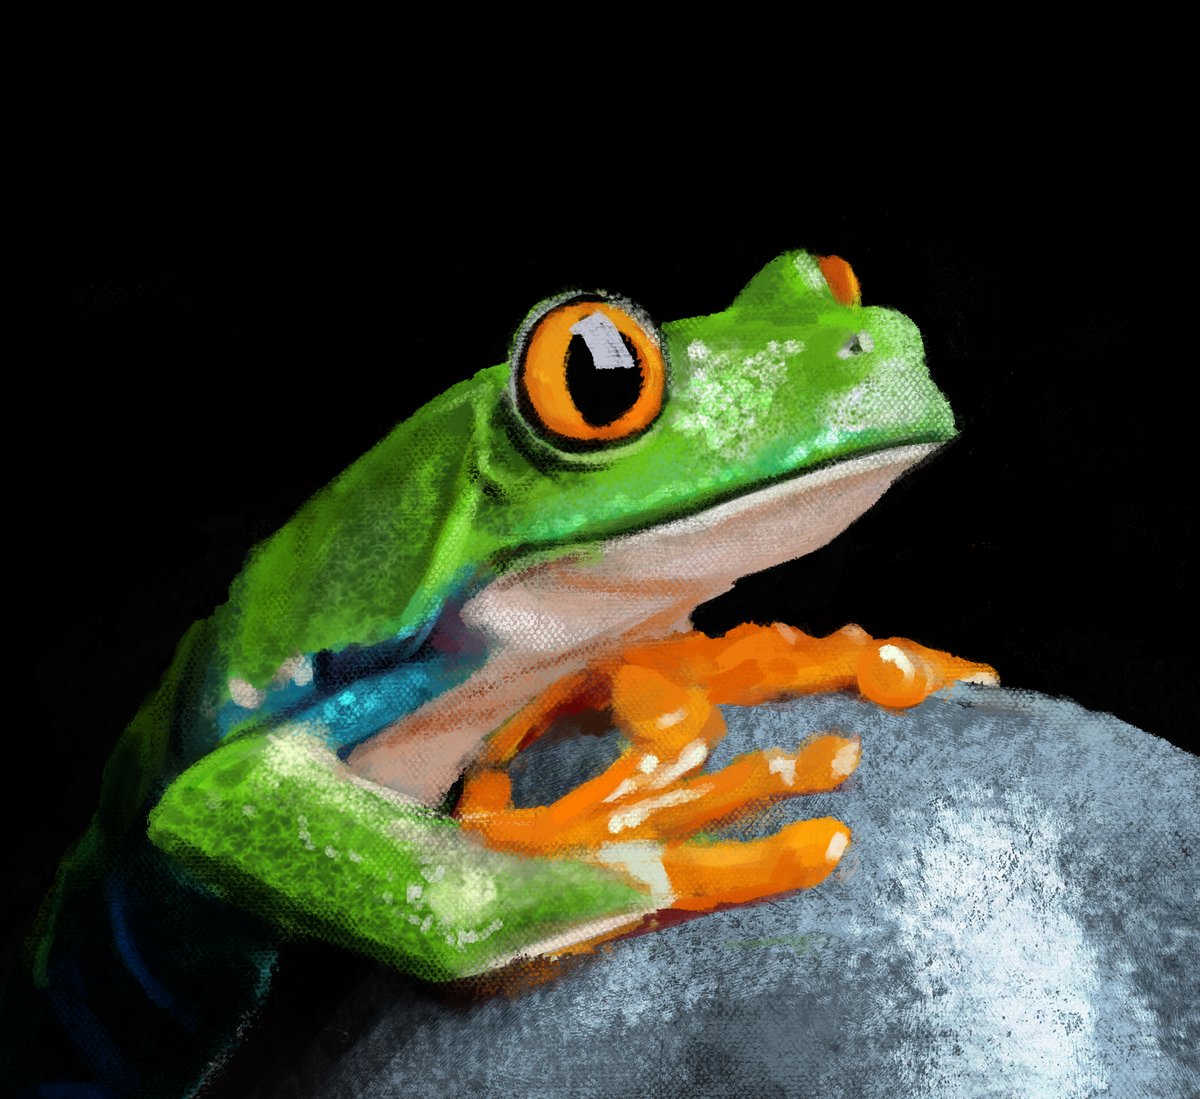 Lil' Frog study I did for class, look at this fella

#clipstudio #illustration #digitalart #notai #digitalillustration #artstudy #frog #animal #animalstudy